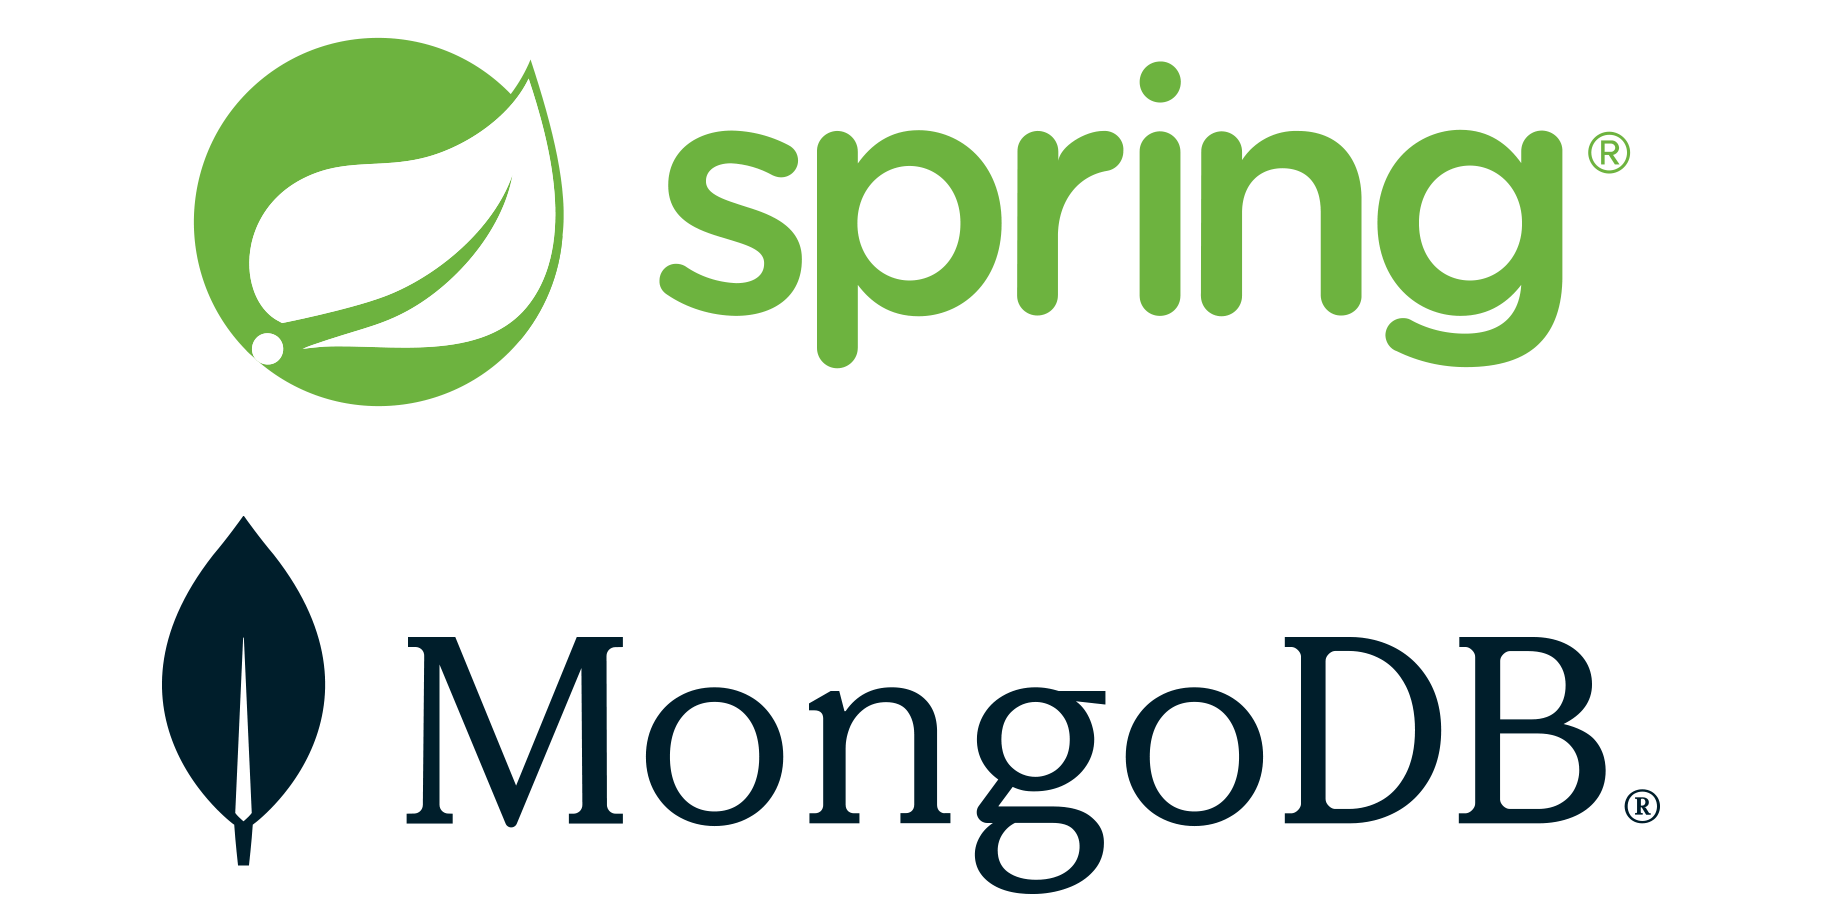 Java Spring Framework and MongoDB Logos